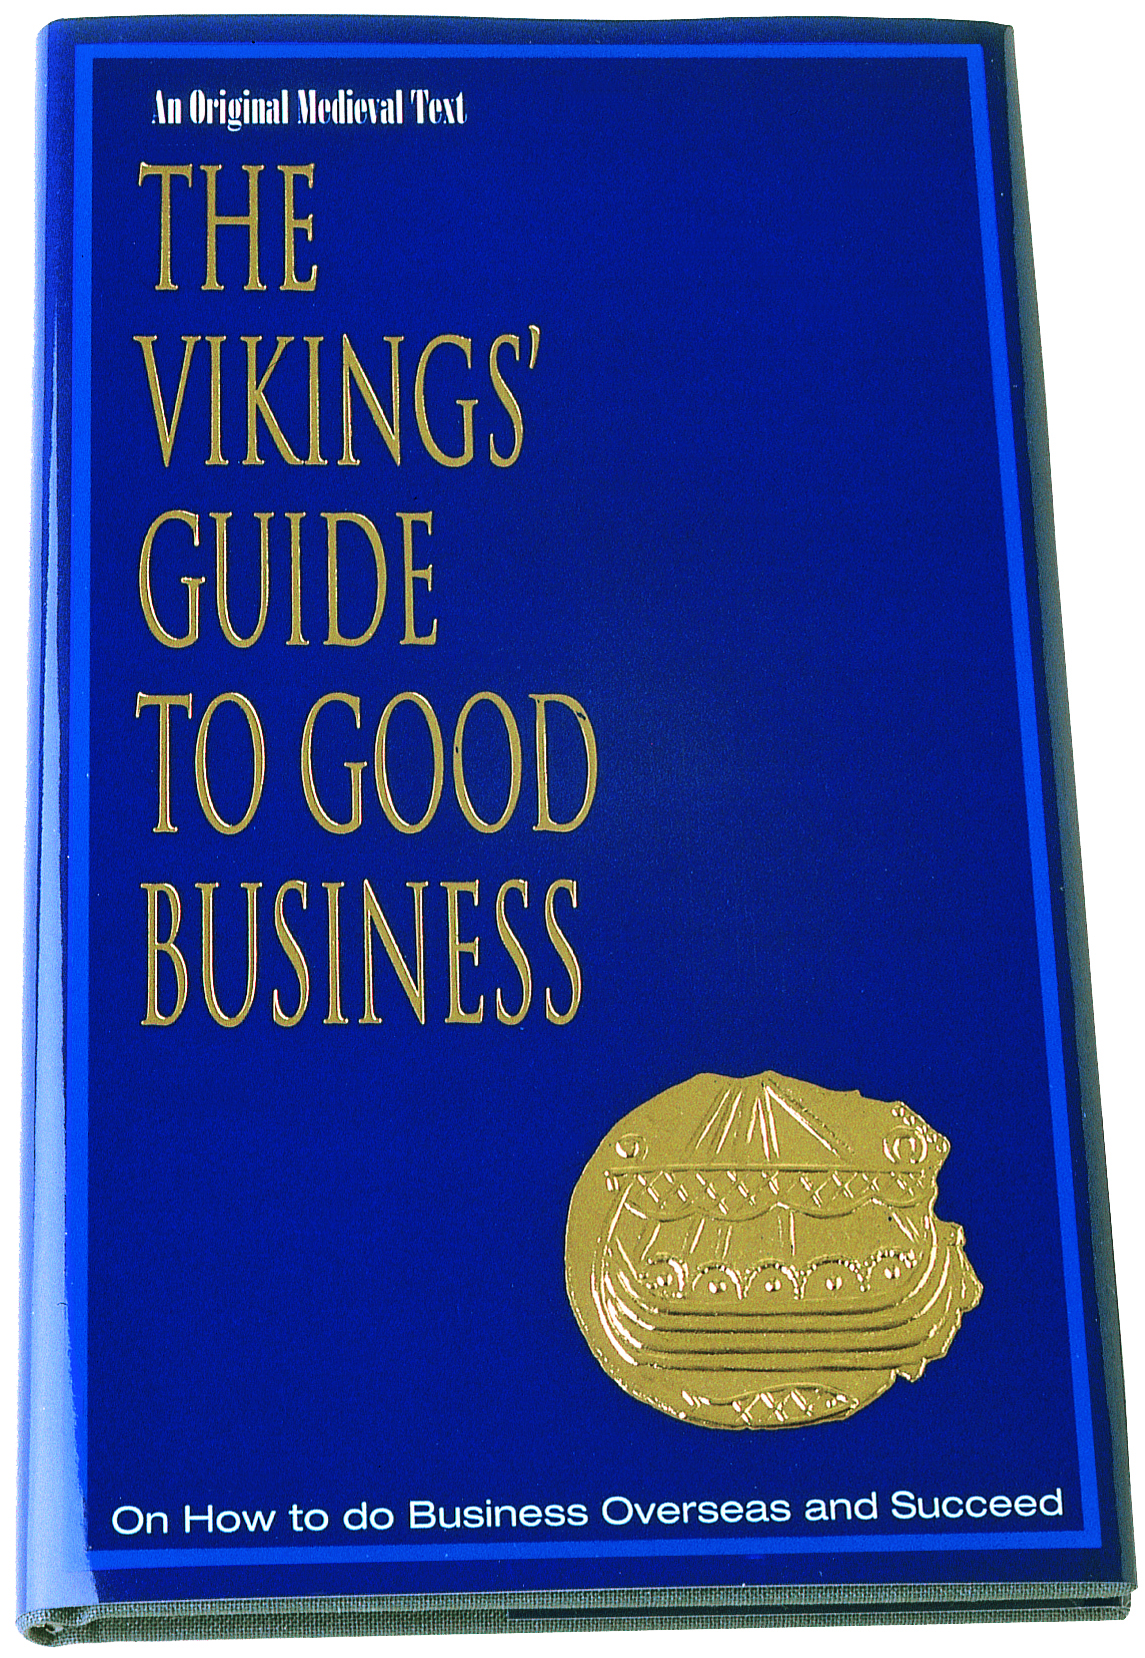 vikings_guide_to_good_business_ensk